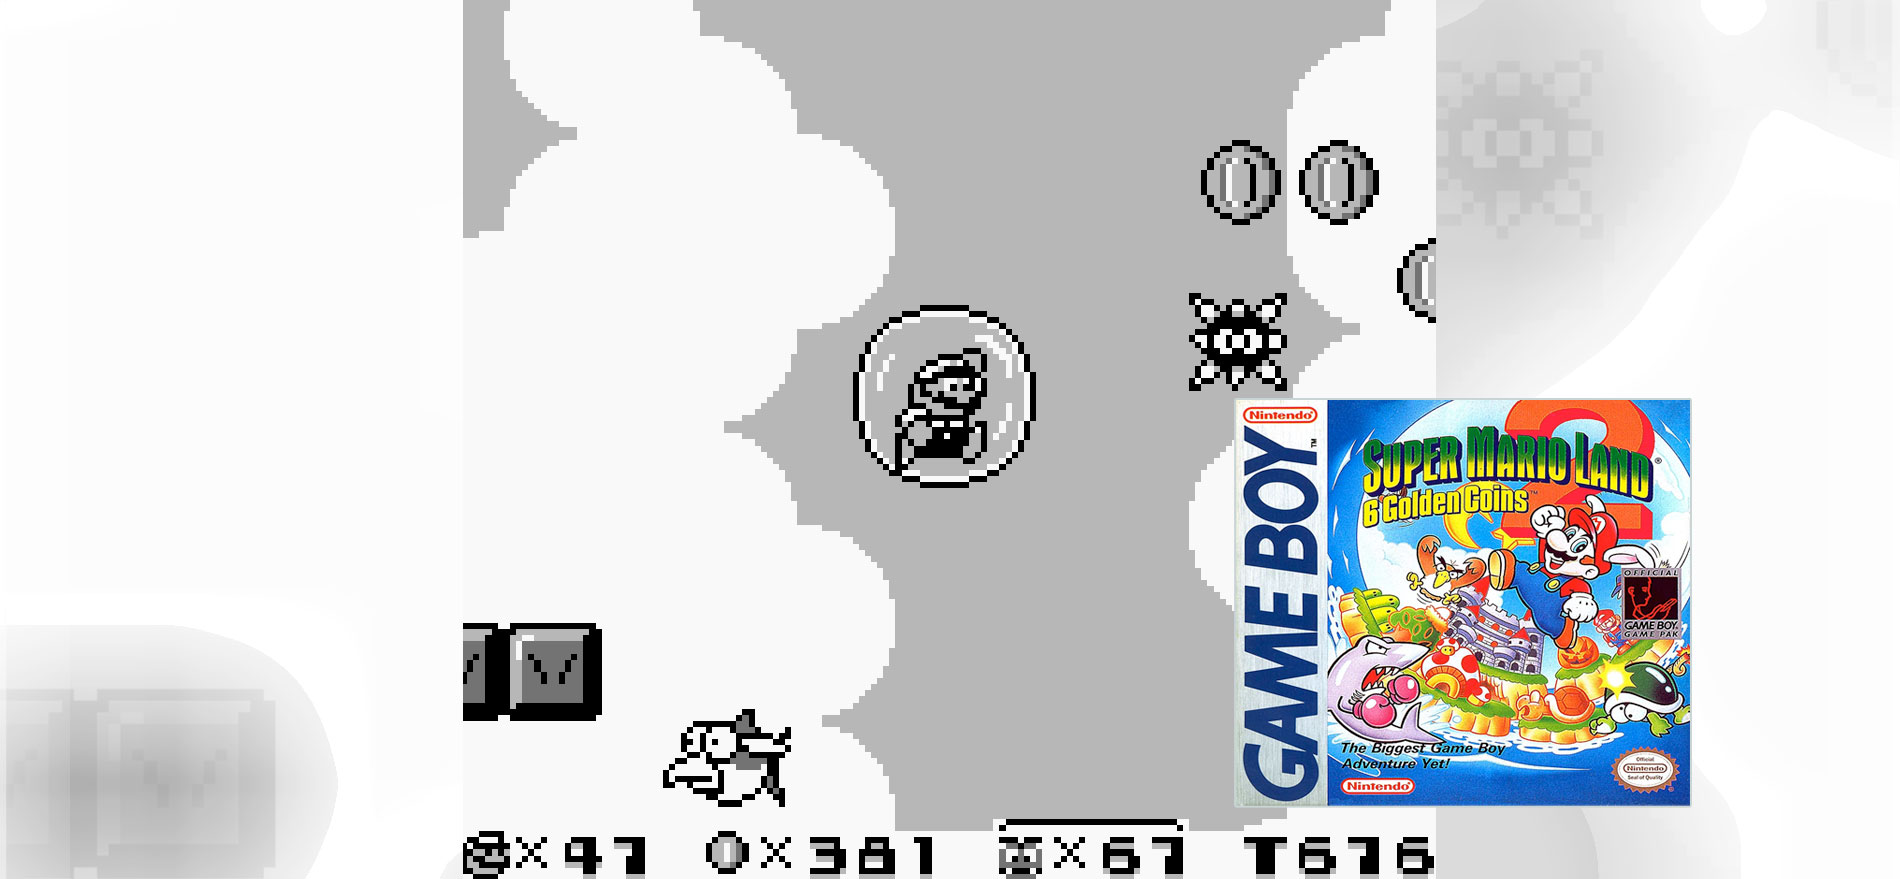 Super Mario Land 2 screenshot and game box